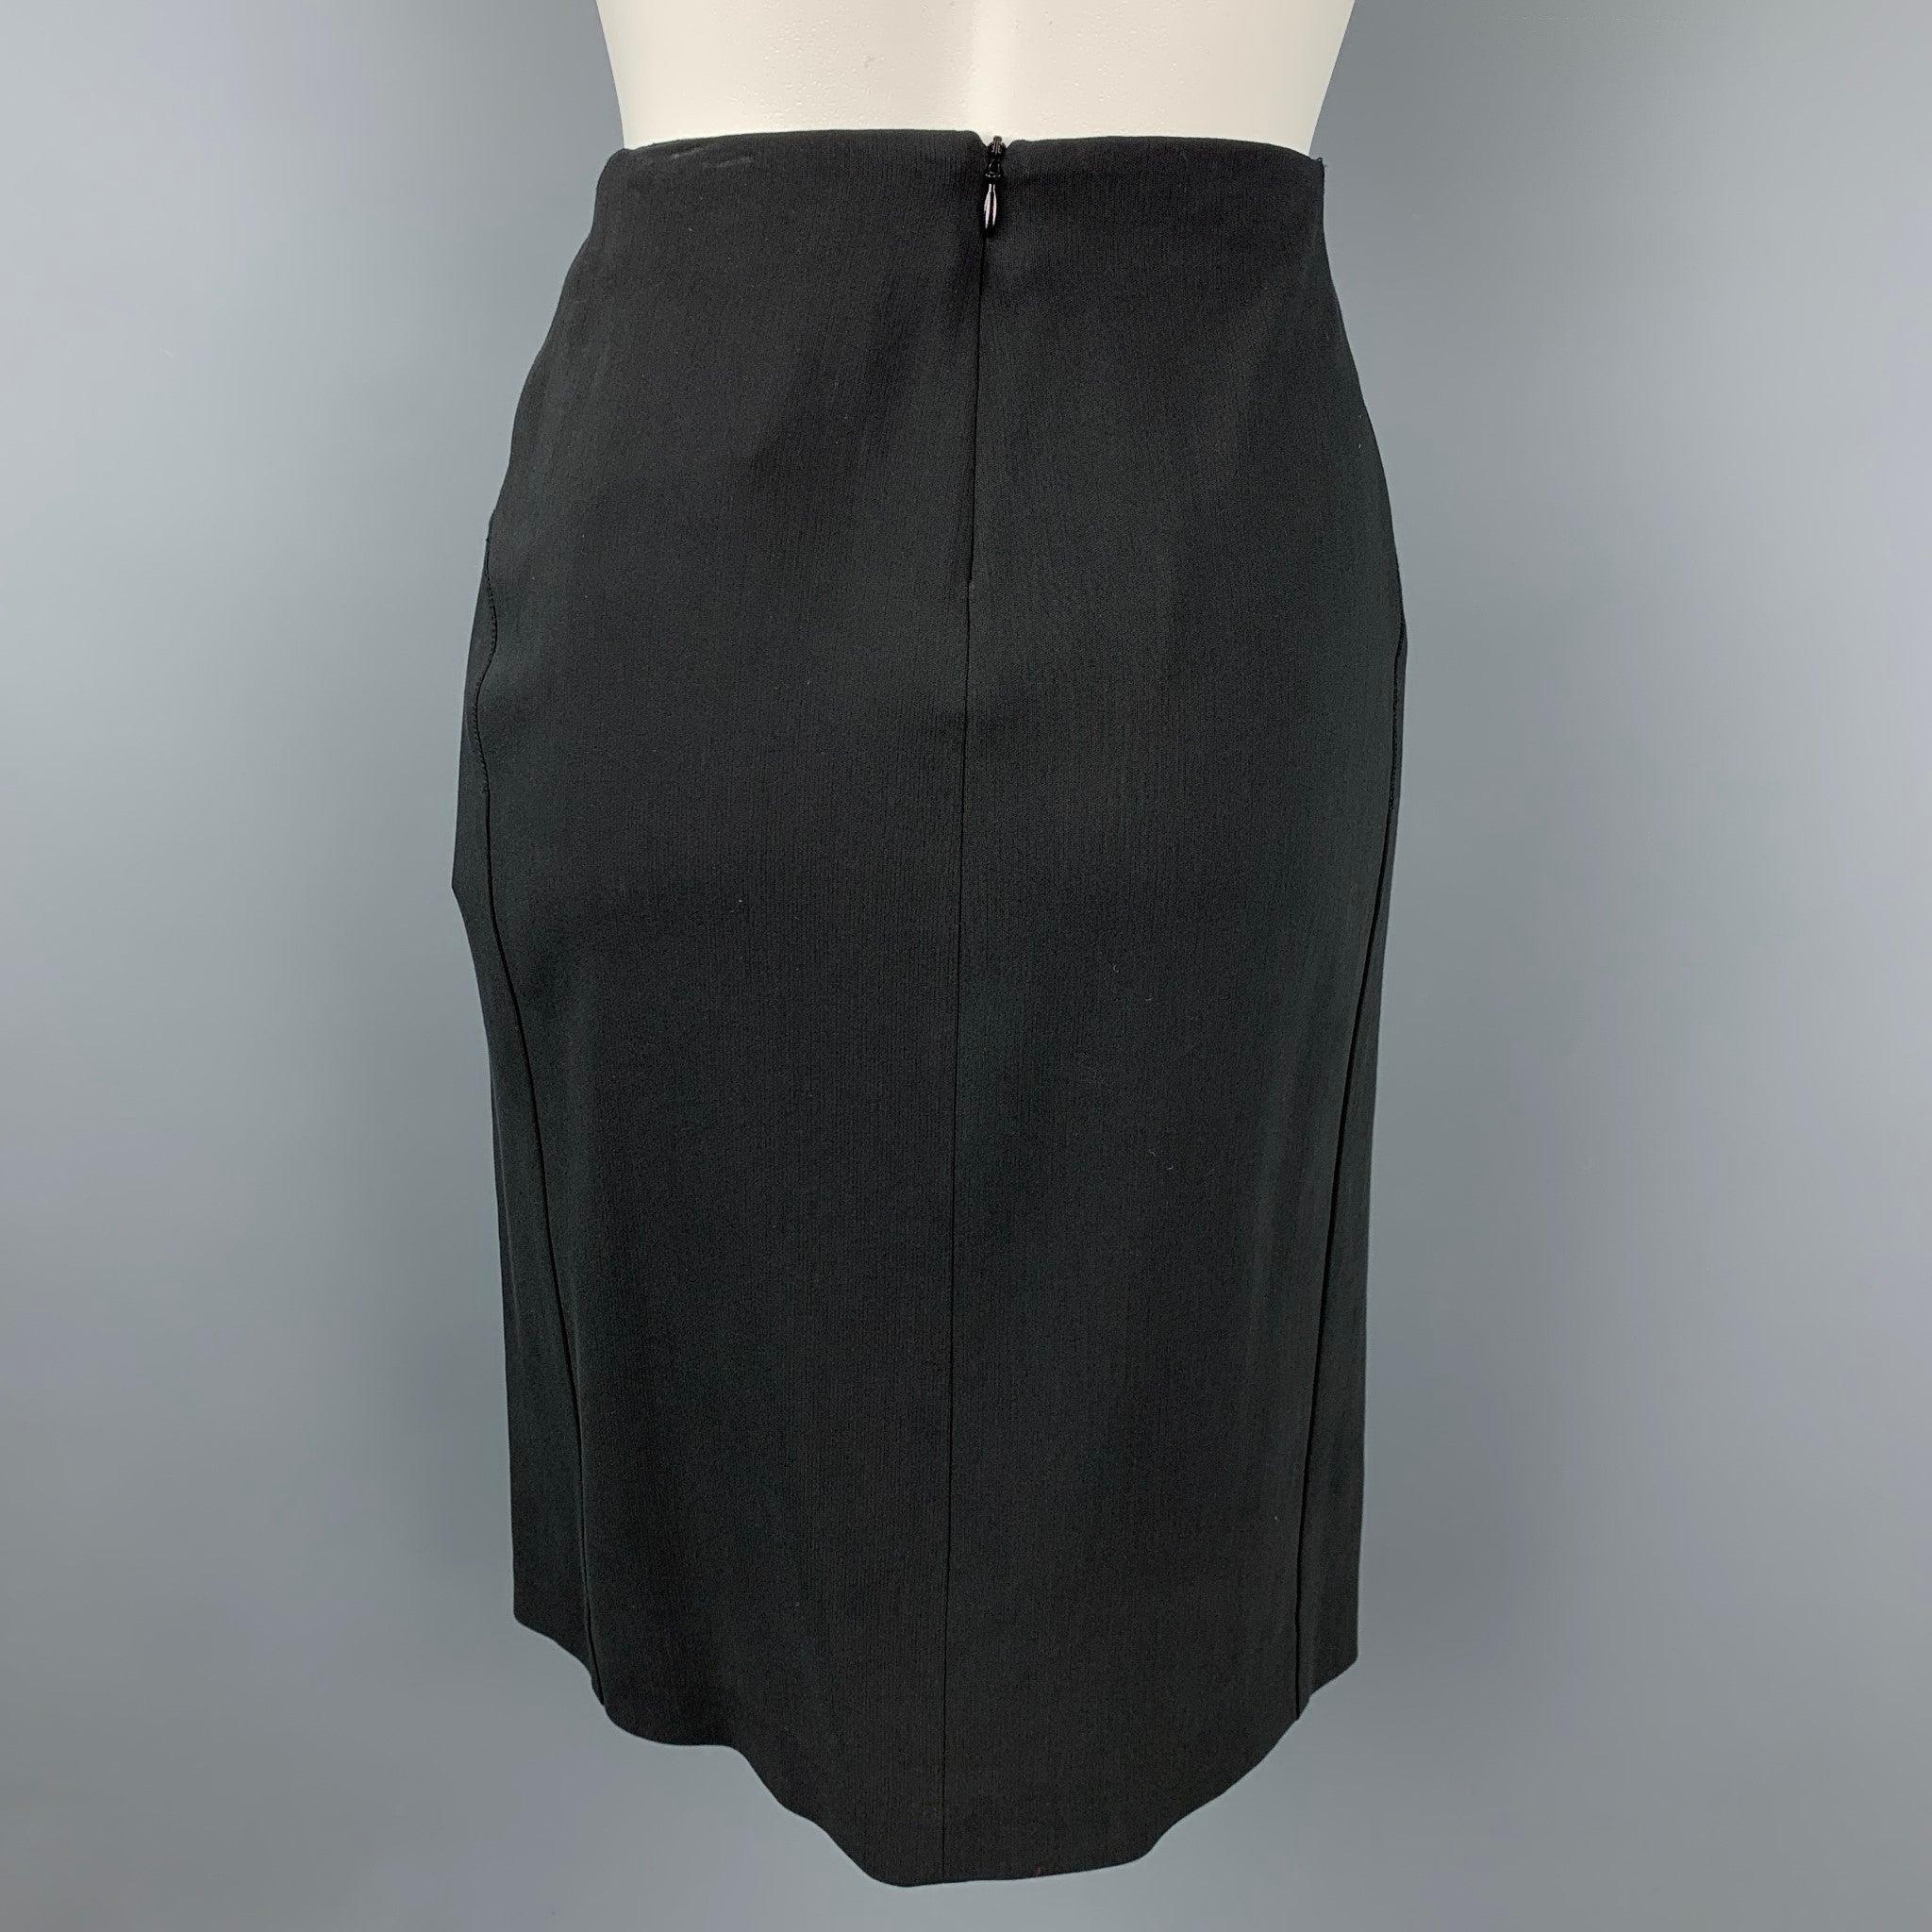 MAISON MARTIN MARGIELA Size 4 Black Cotton / Silk Pencil Skirt In Excellent Condition For Sale In San Francisco, CA